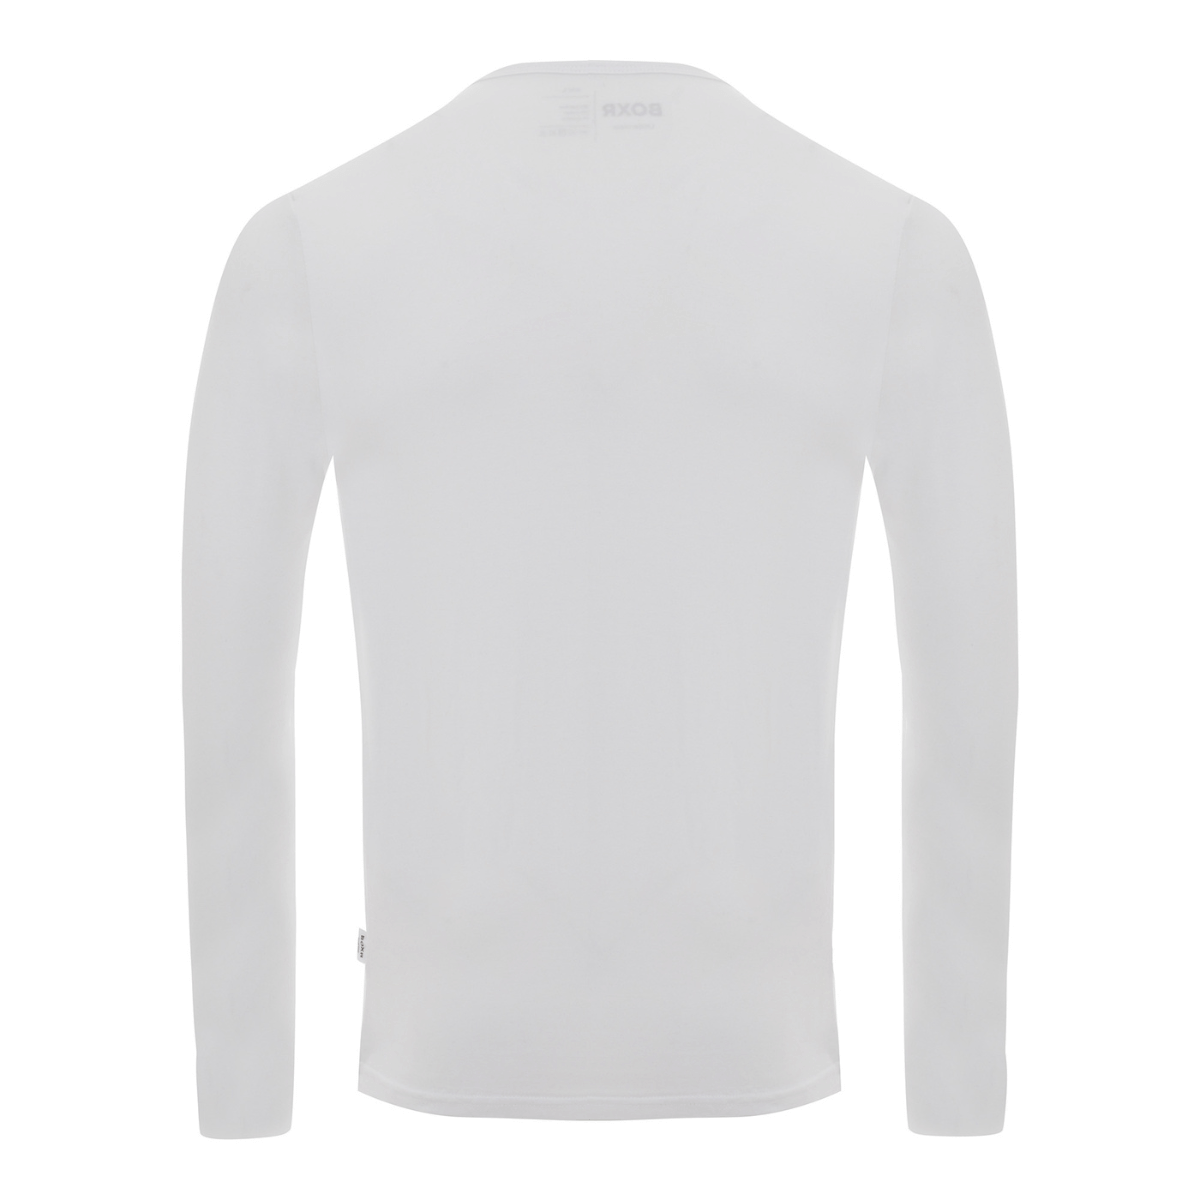 BOXR | Bamboo T-Shirt Longsleeve 4-Pack White